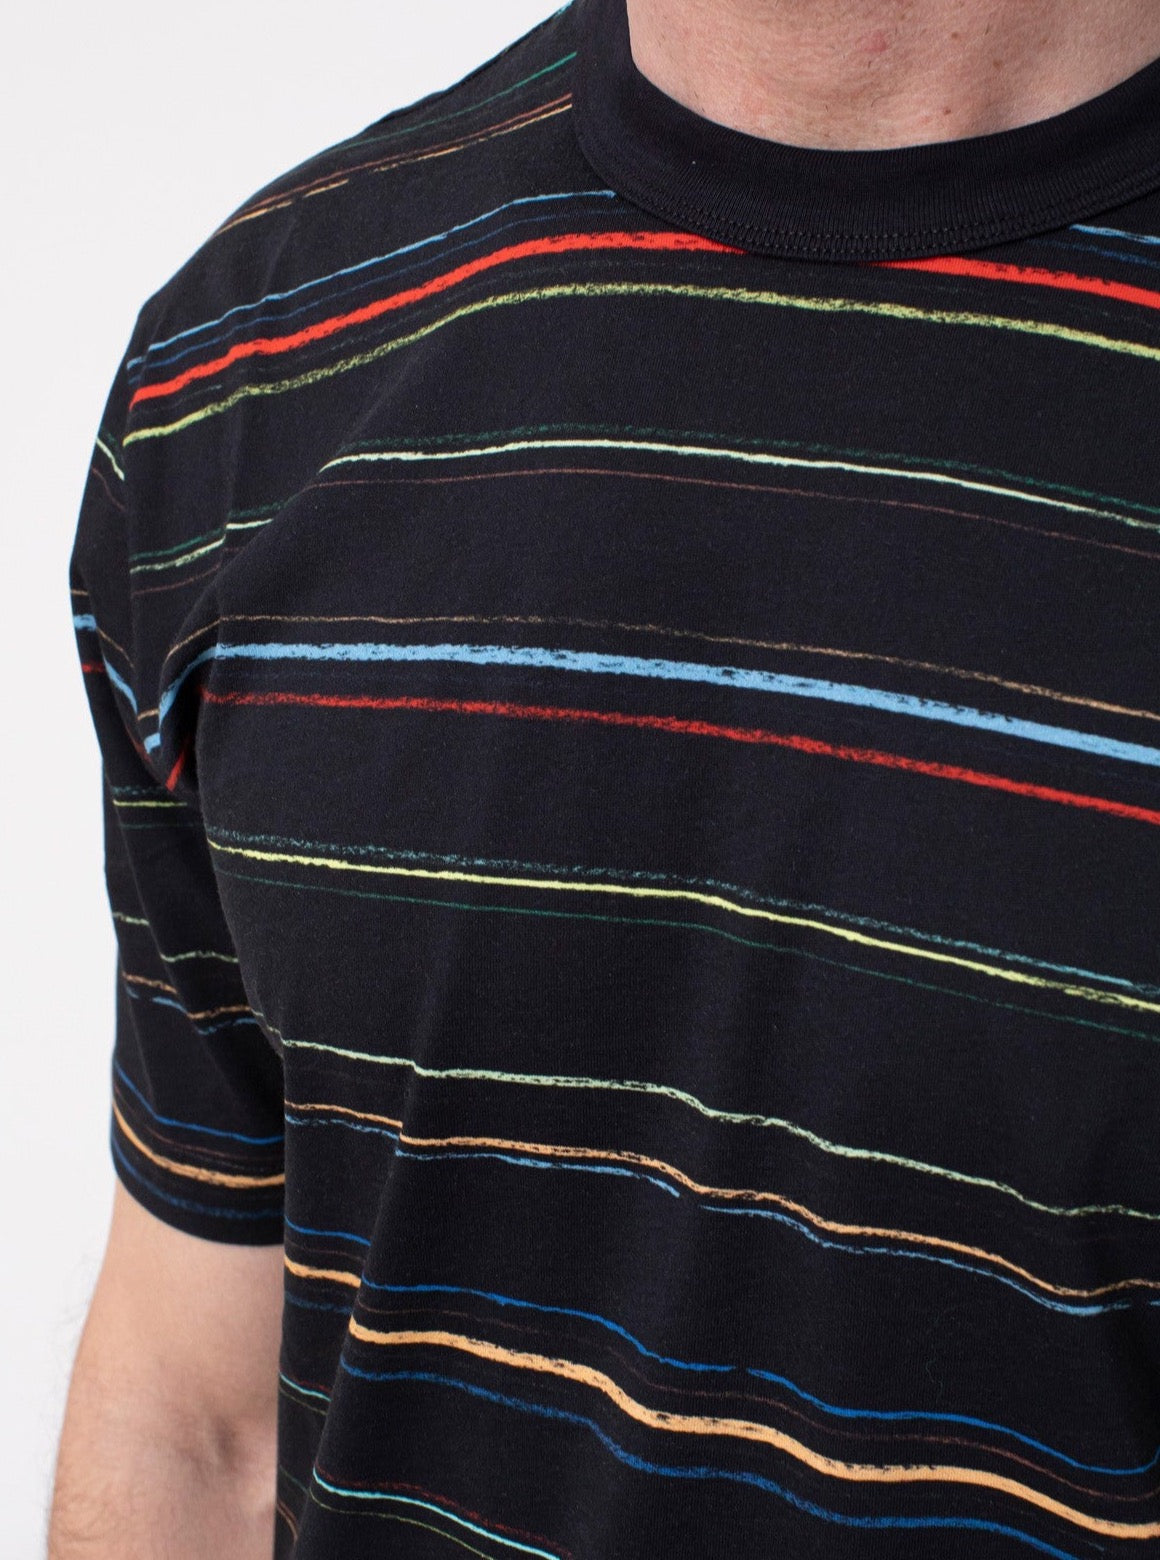 Paul Smith Black Striped T-Shirt